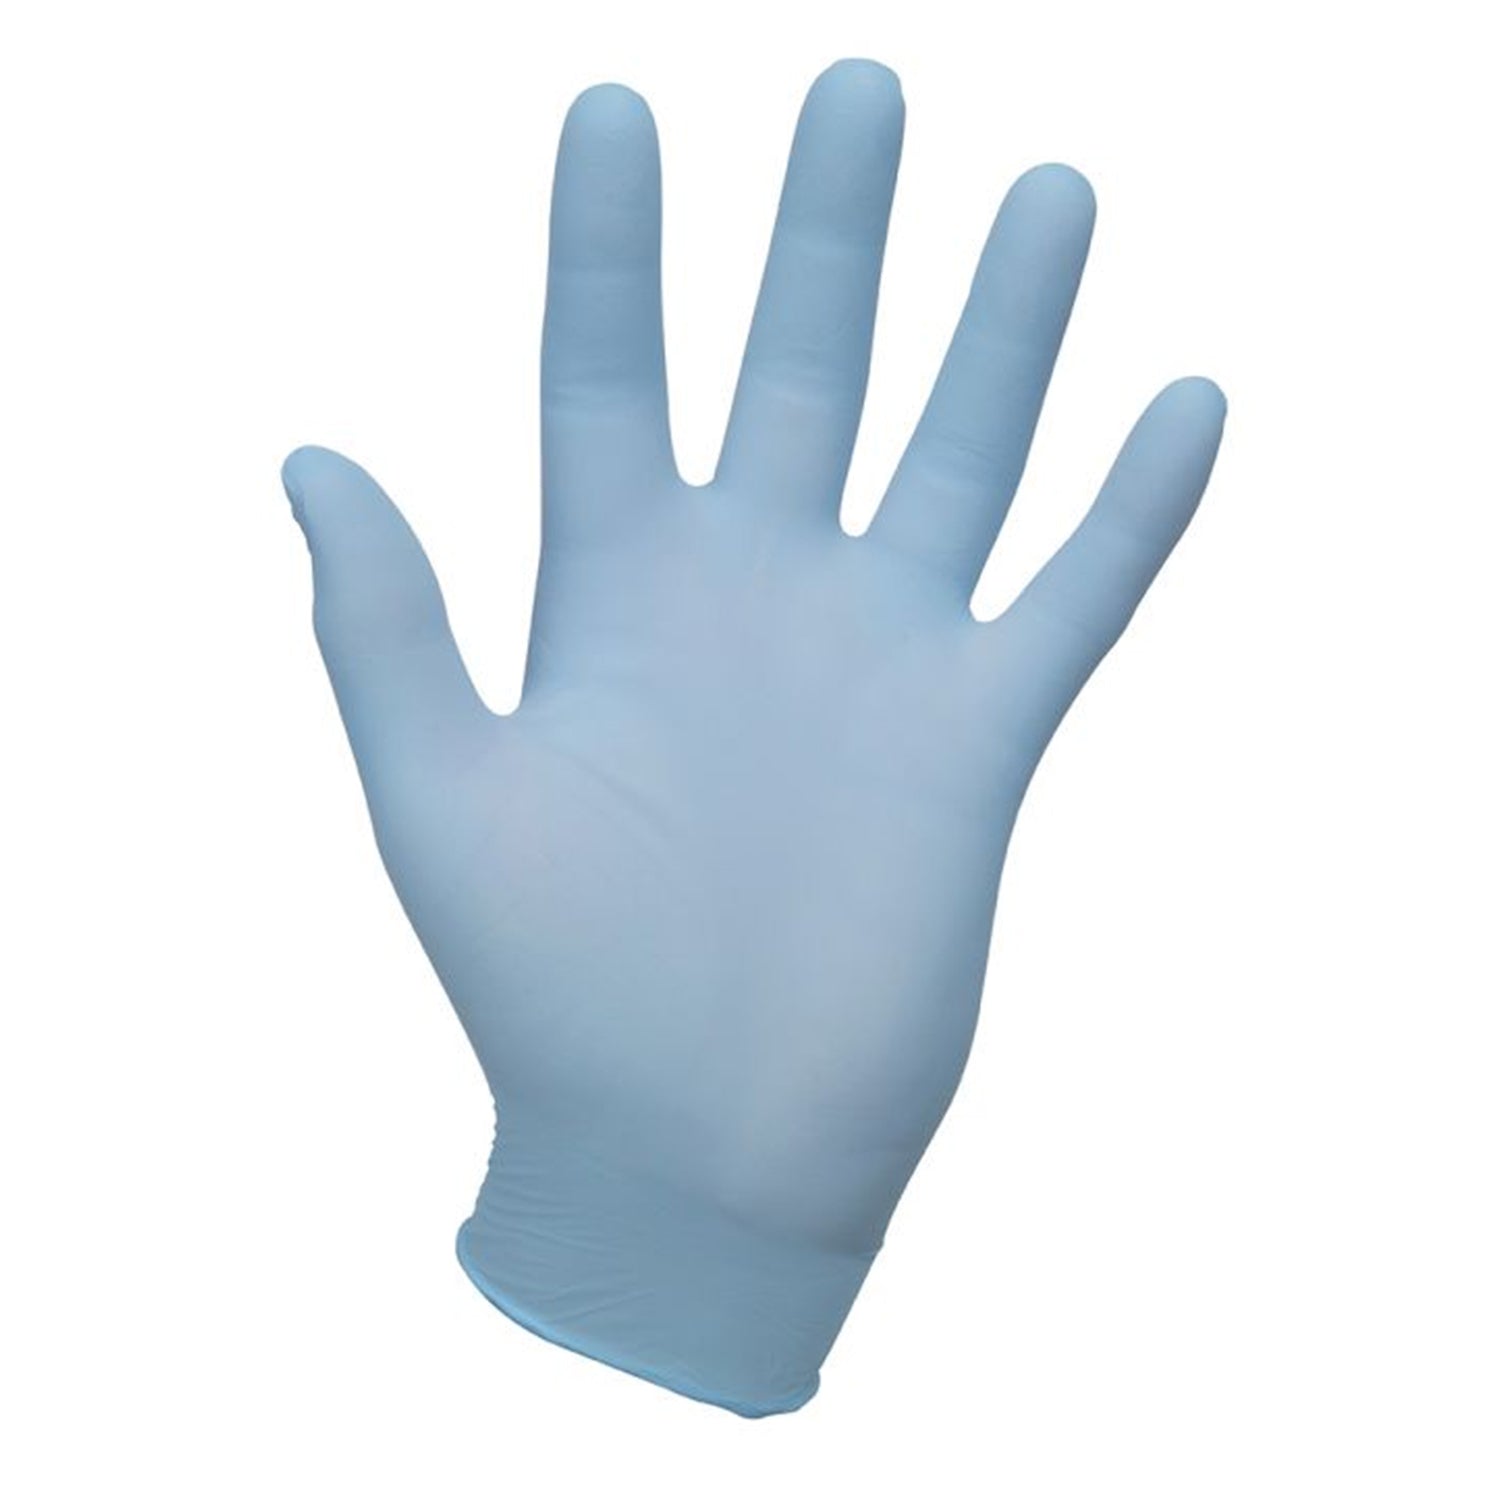 Premier AF Nitrile Examination Gloves | Sterile | Latex Free | Large | Pack of 50 Pairs (1)